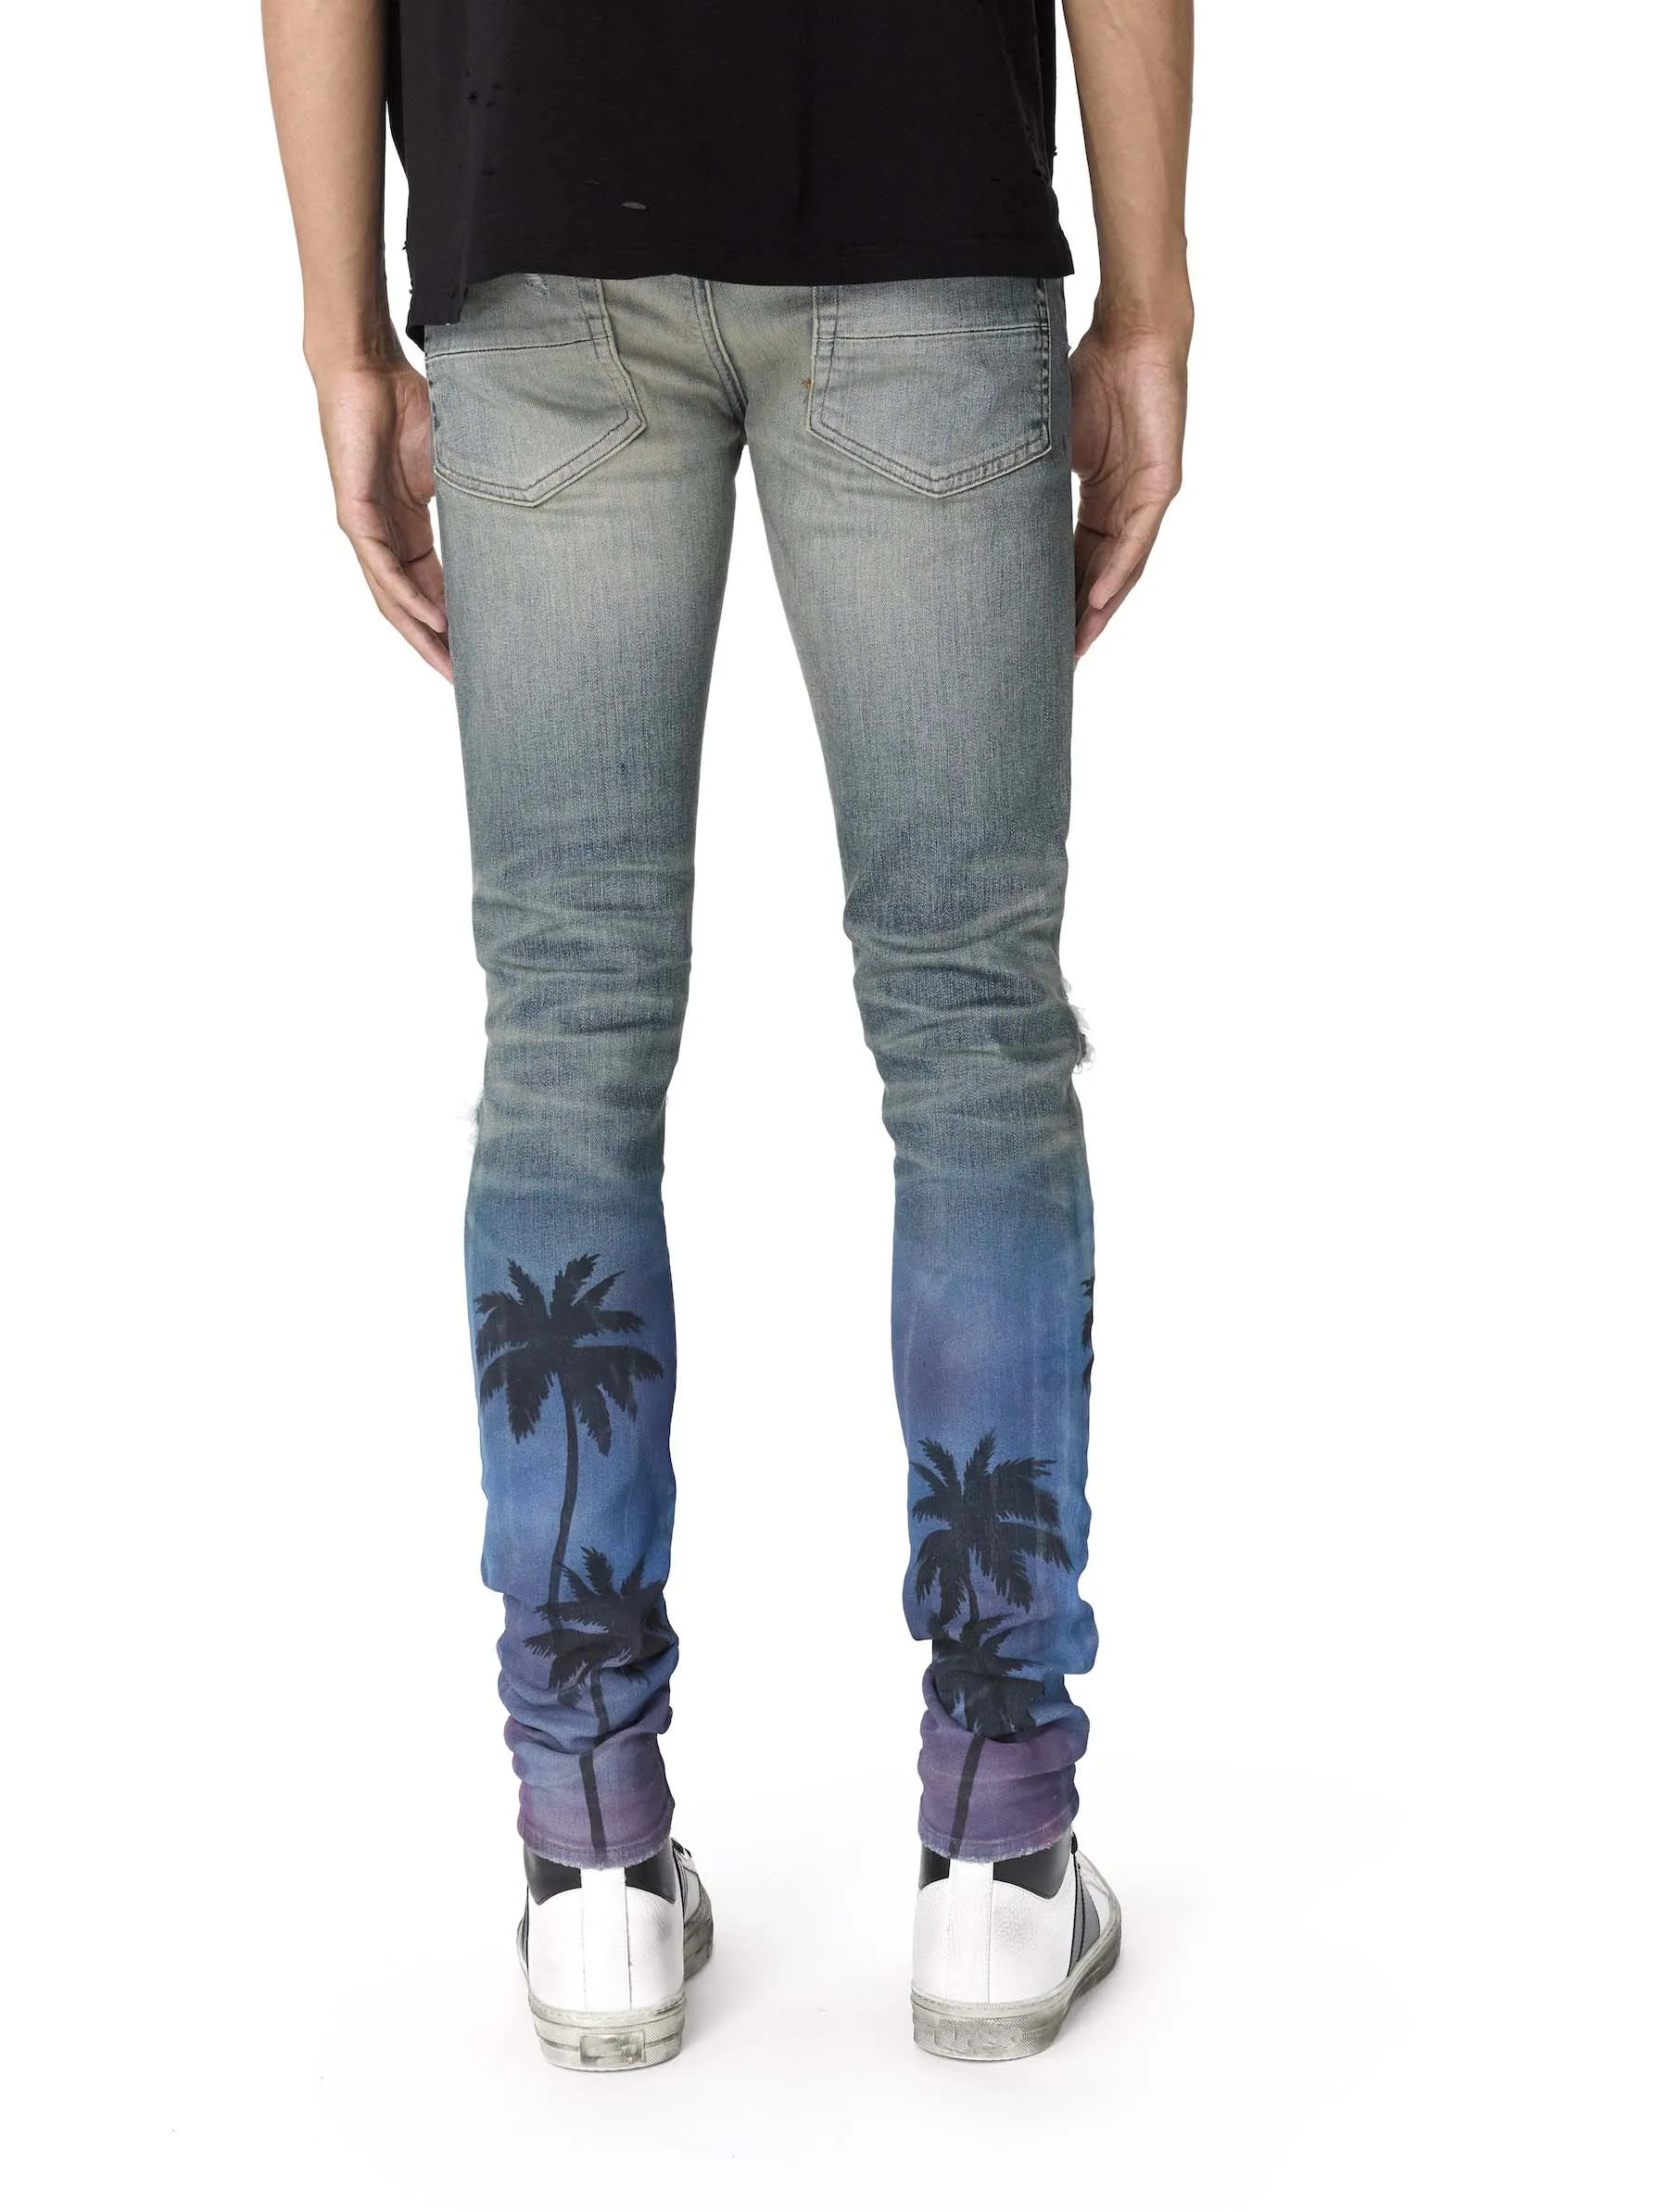 Diznew Custom Stretch Denim Palm Print Jeans For Men - Buy Stretch ...